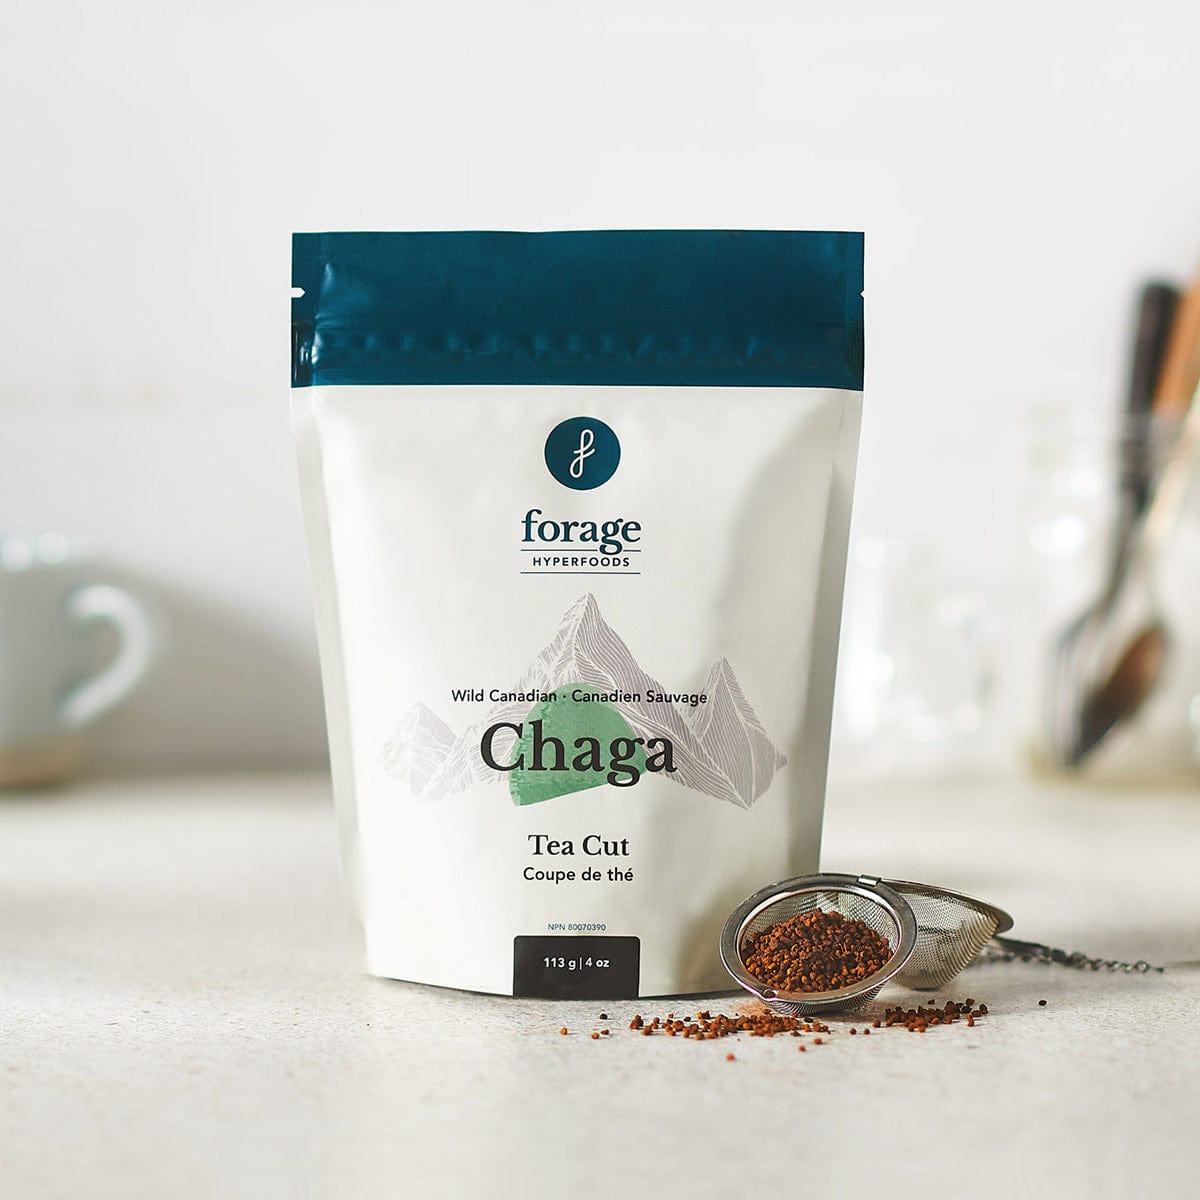 A bag of Canadian Chaga Tea Cut by Forage Hyperfoods with Tea Cut rough coarse powder of Chaga mushroom next to it.